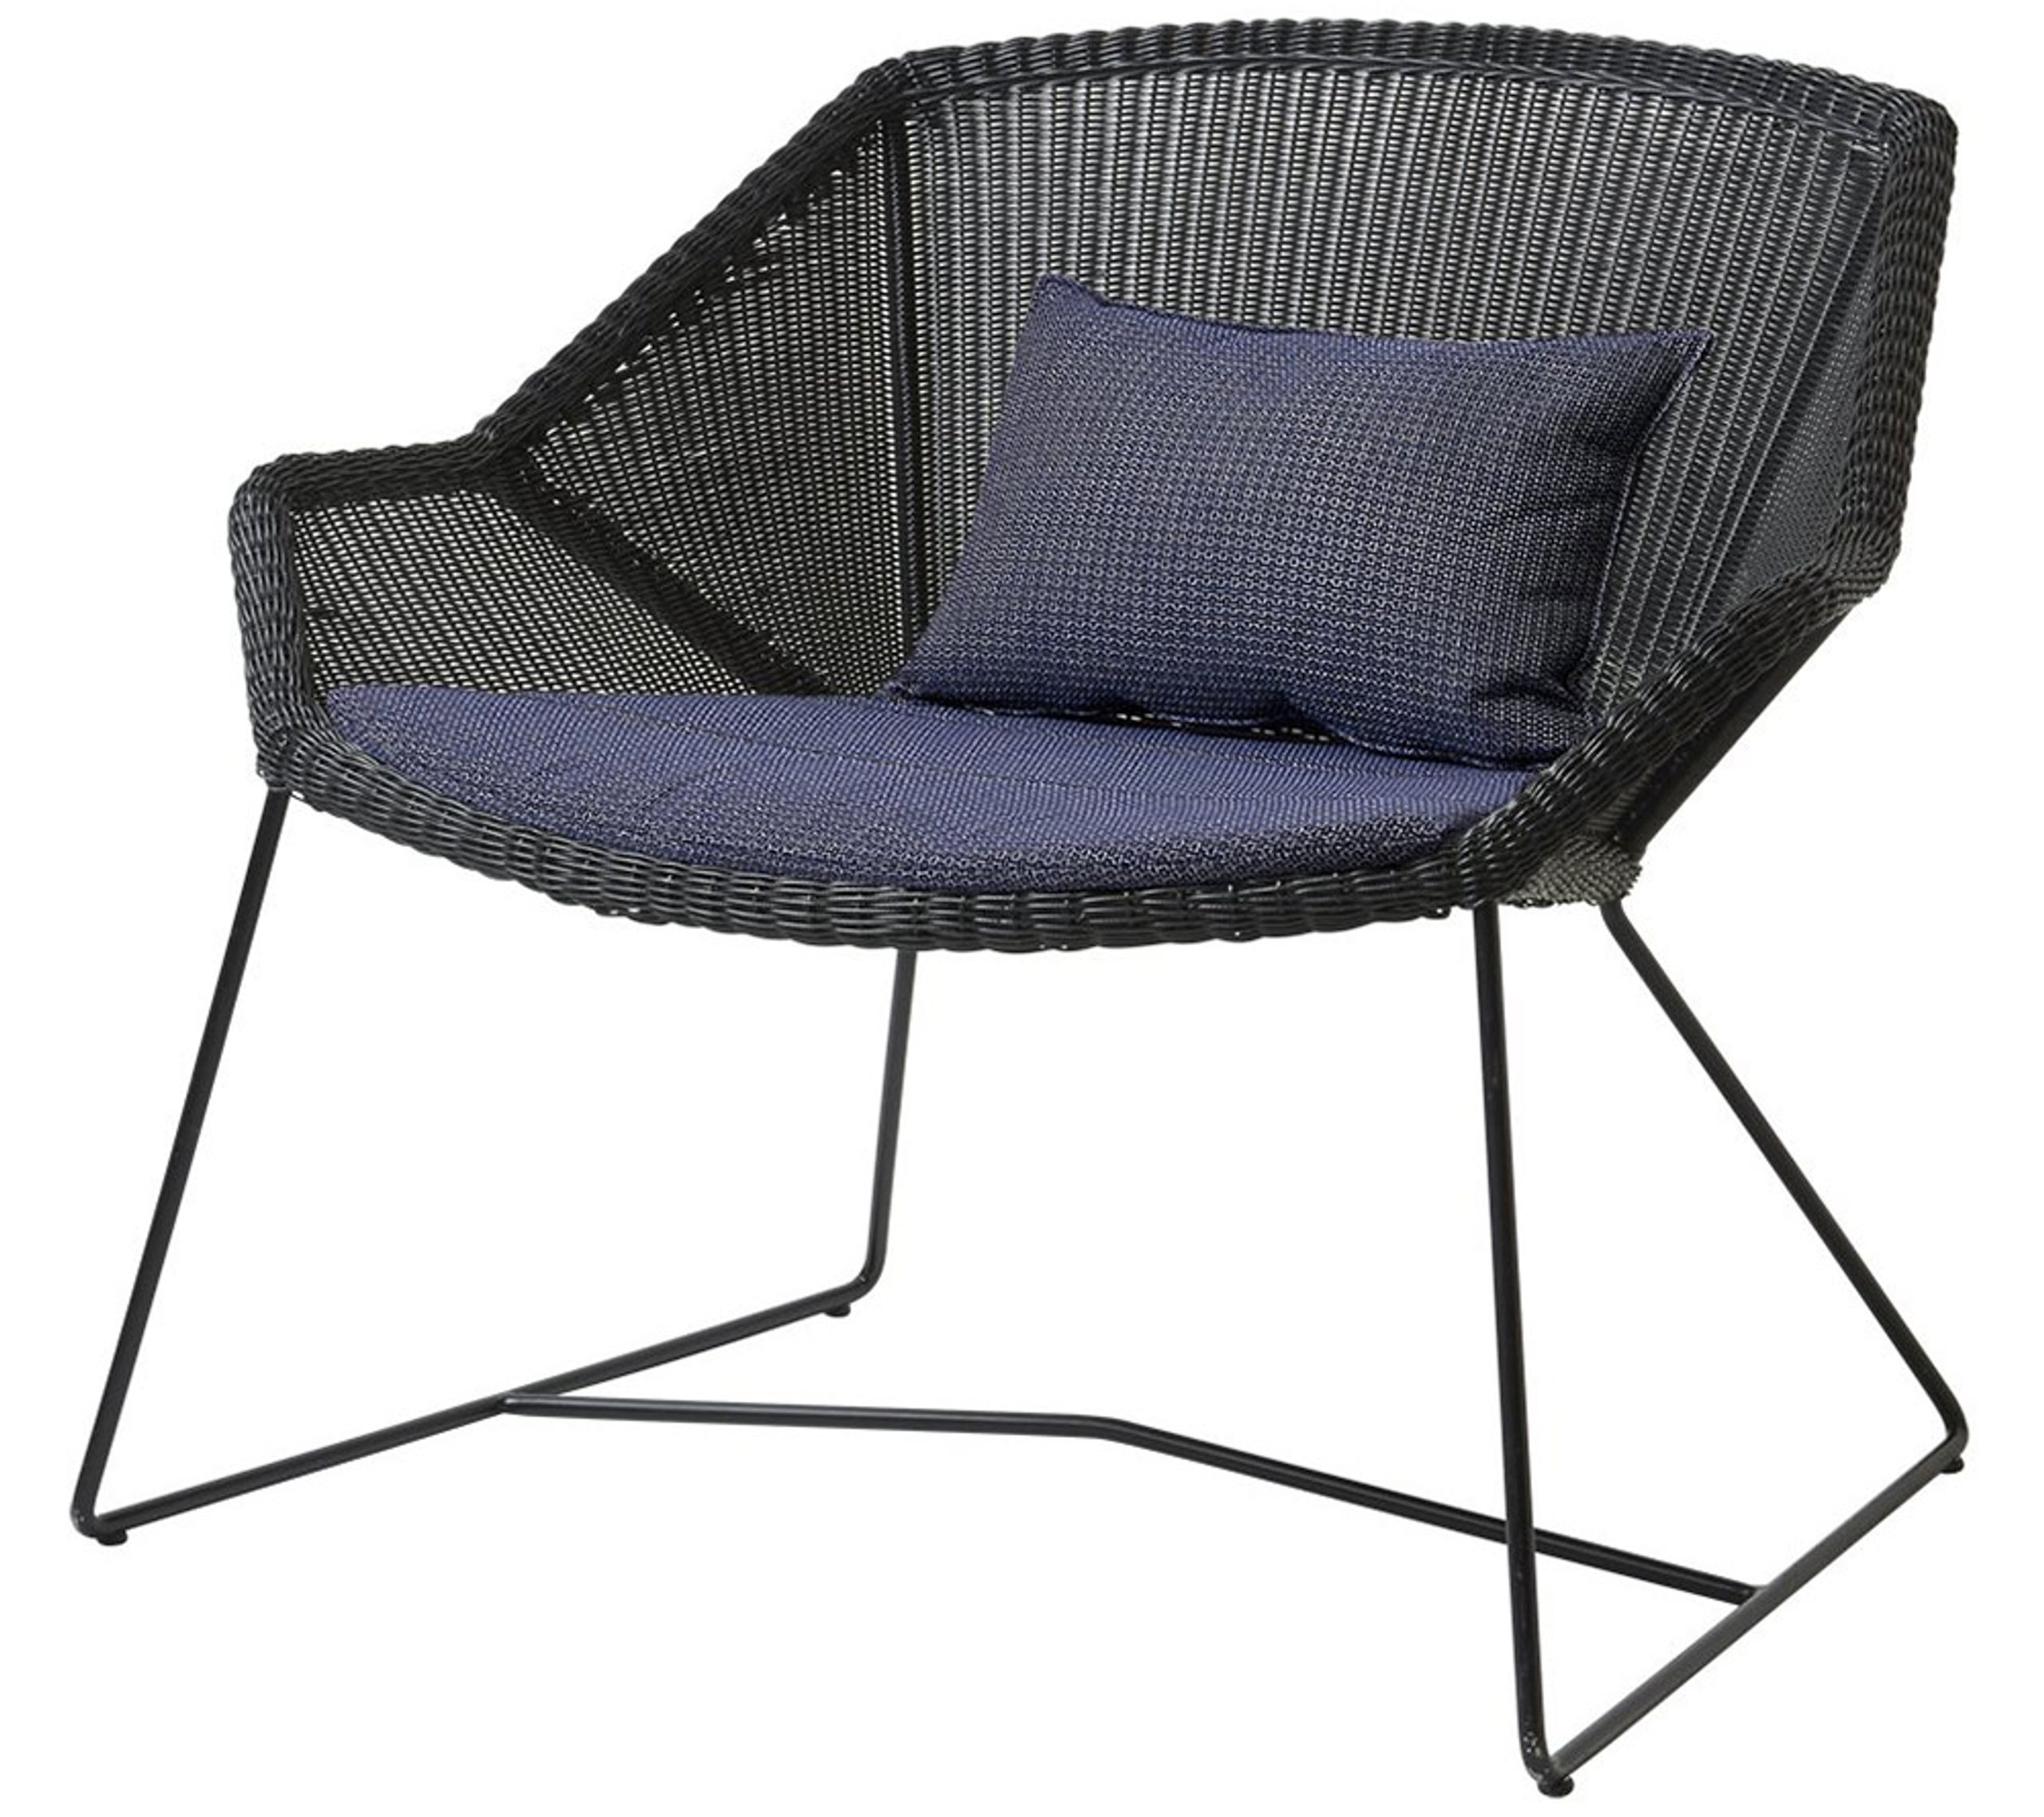 Cane-line - Coussin - Breeze Lounge Chair Cushion - Blue - Cane-line Link